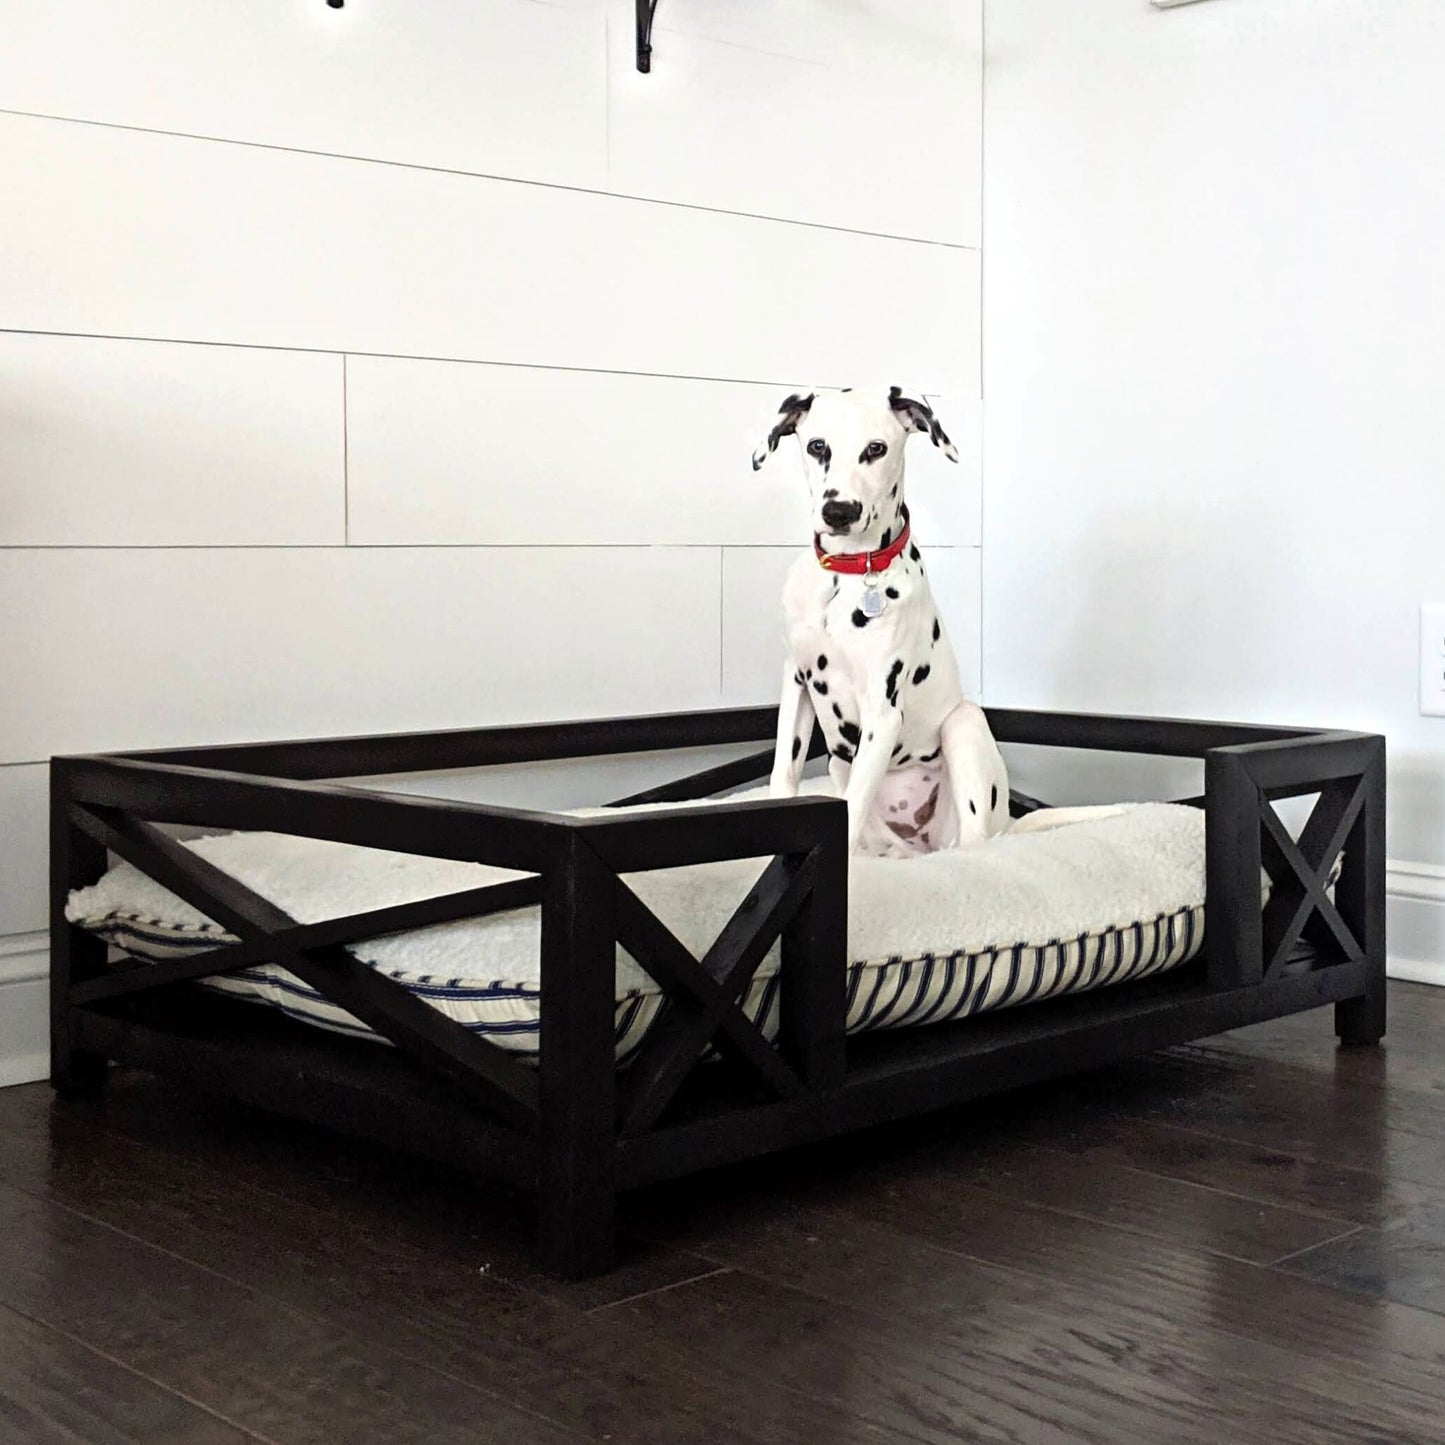 Dog Bed Printable Plans